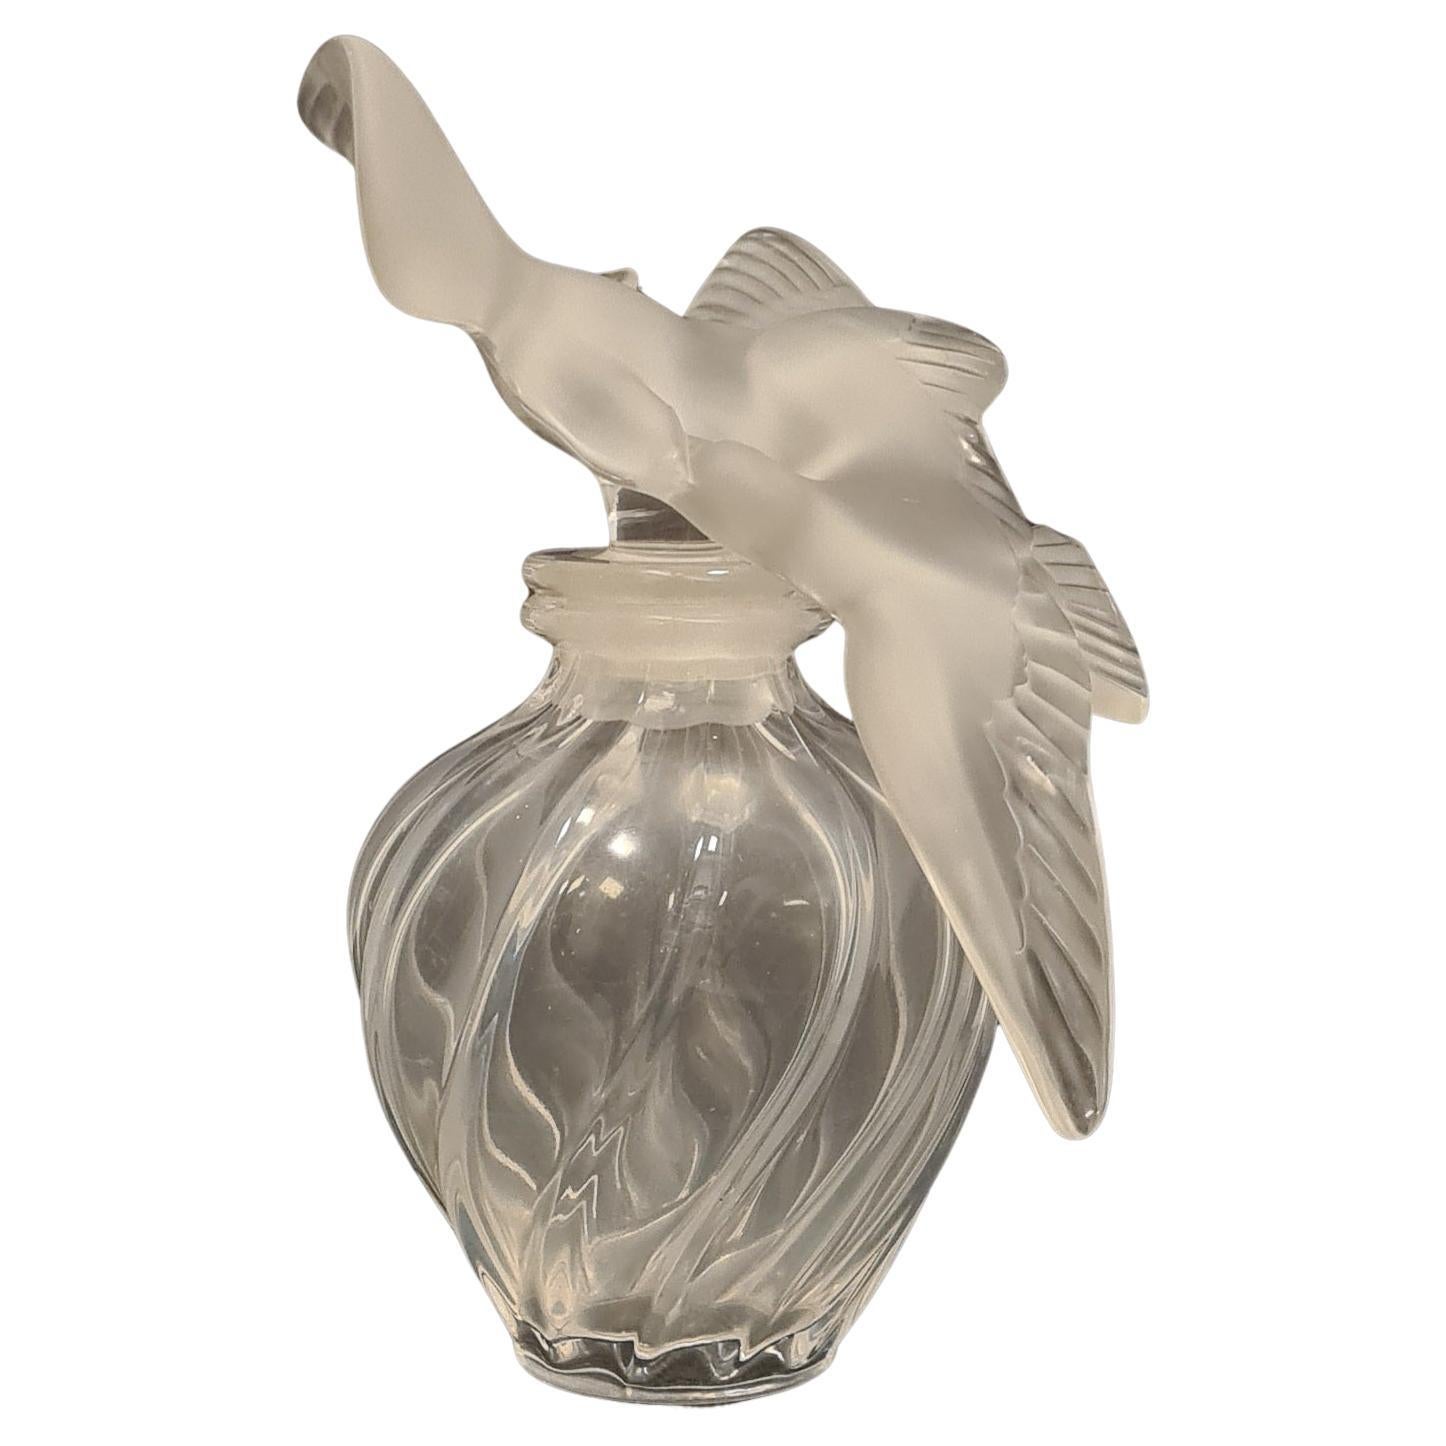 Large collectible Lalique glass bottle of the perfume L'air du temps For Sale